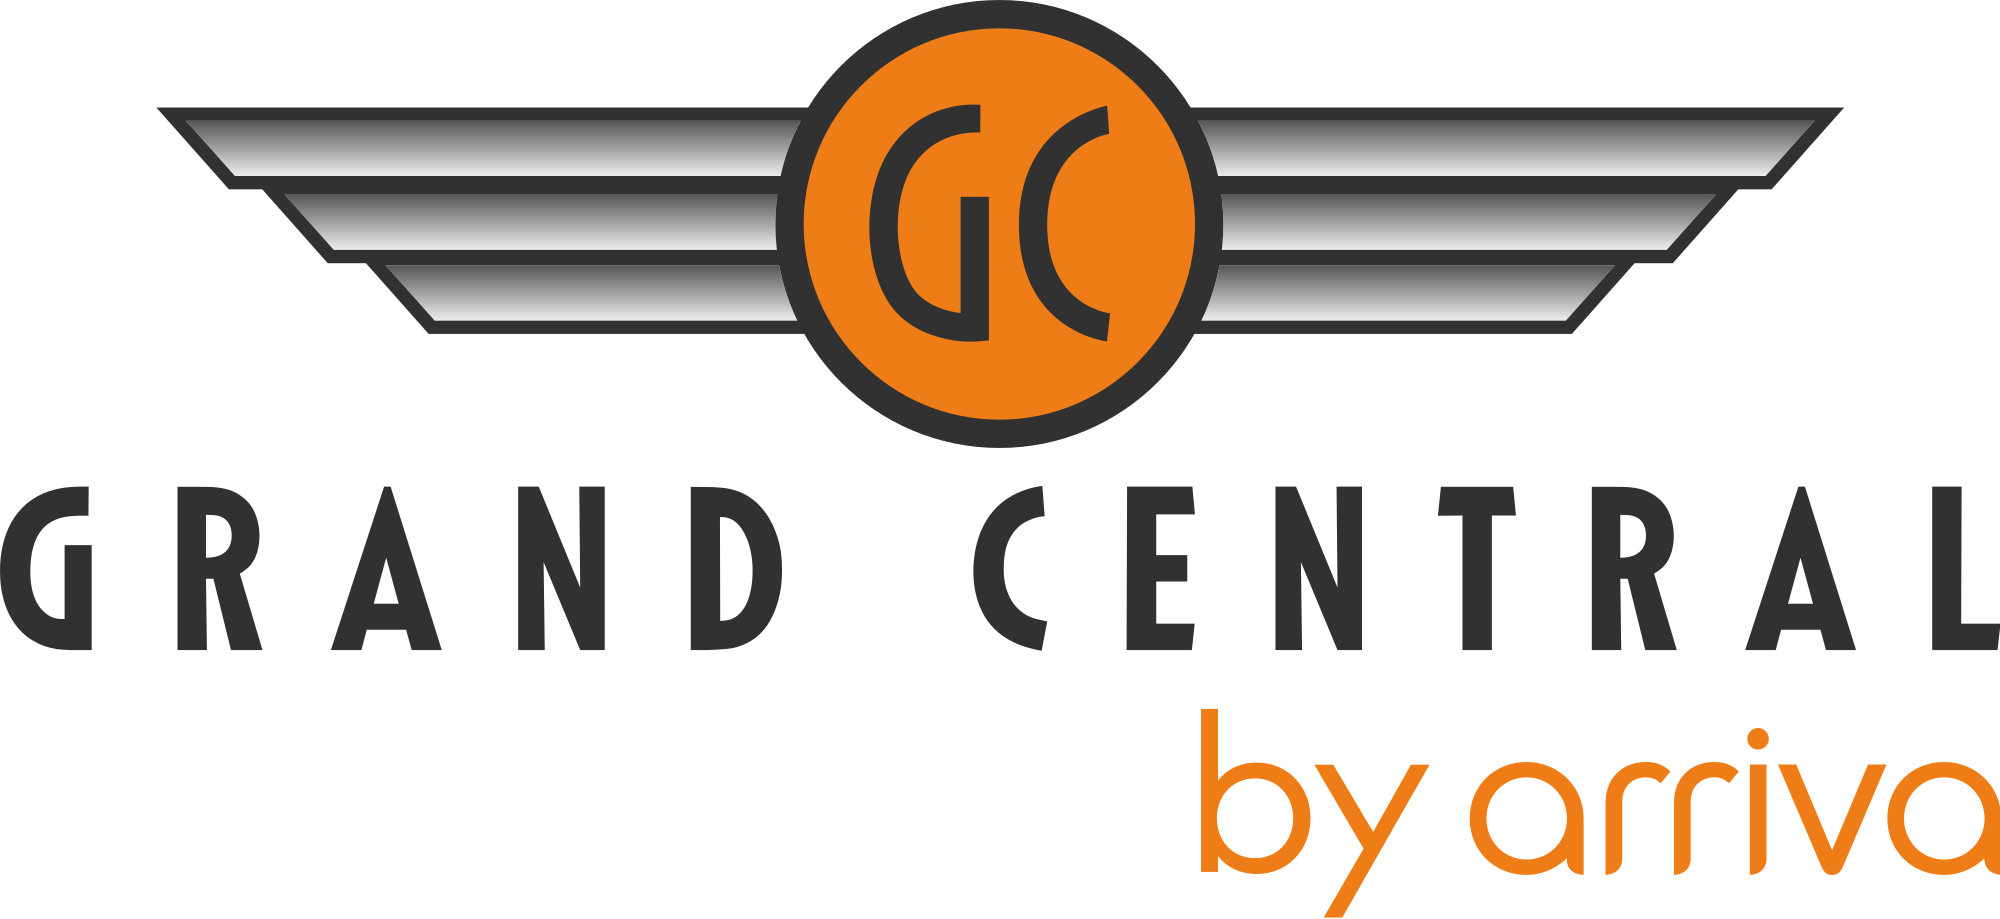 Grandcentral Railway Logo 2000Px